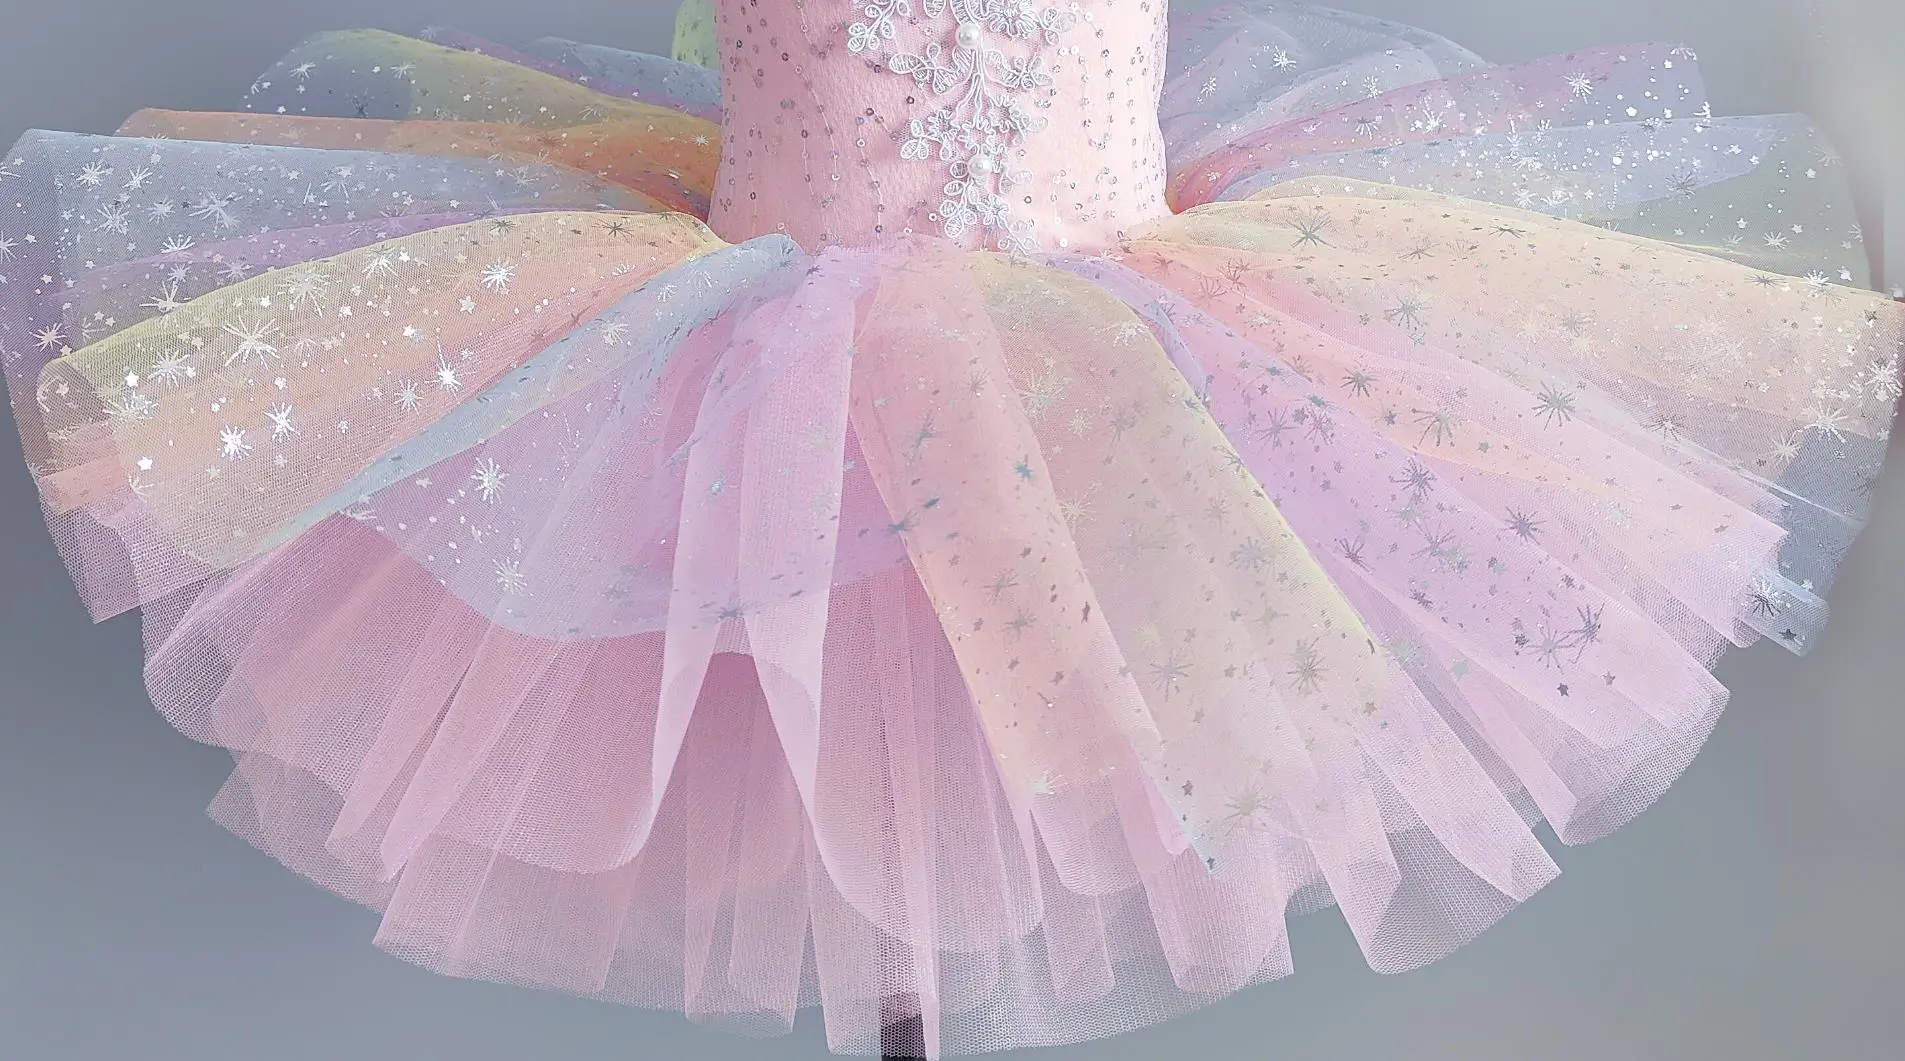 Kids Ballet Dress Seven Colors Girls Children Sequined Princess Dress Ballet Tutu Dance Clothes Performance Tutu Skirts